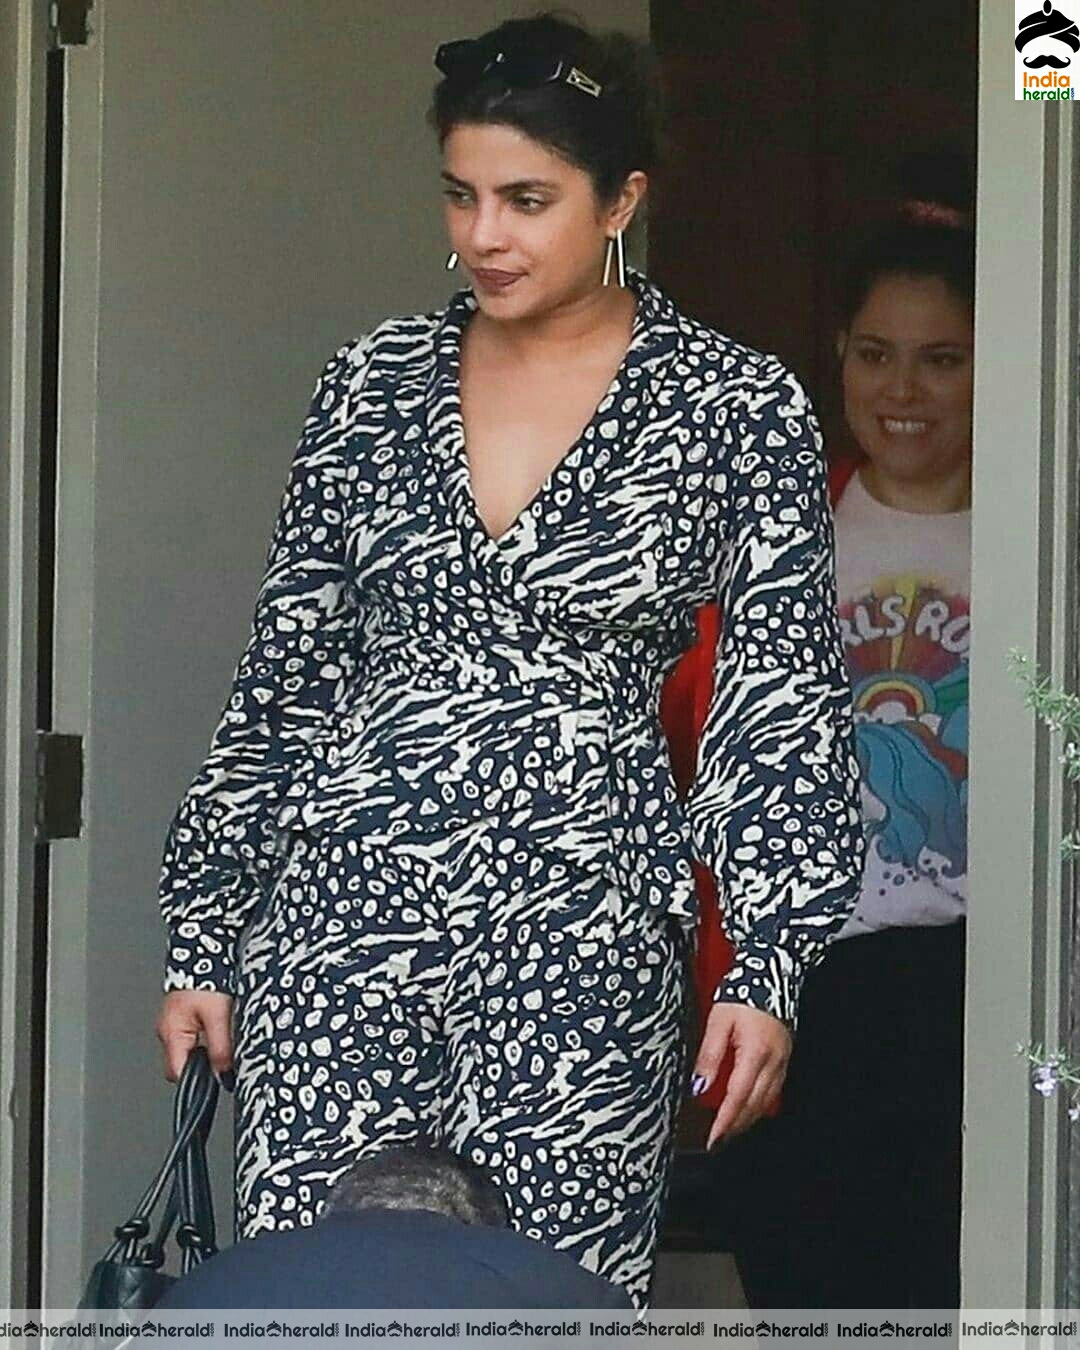 Priyanka Chopra spotted outside studios without makeup